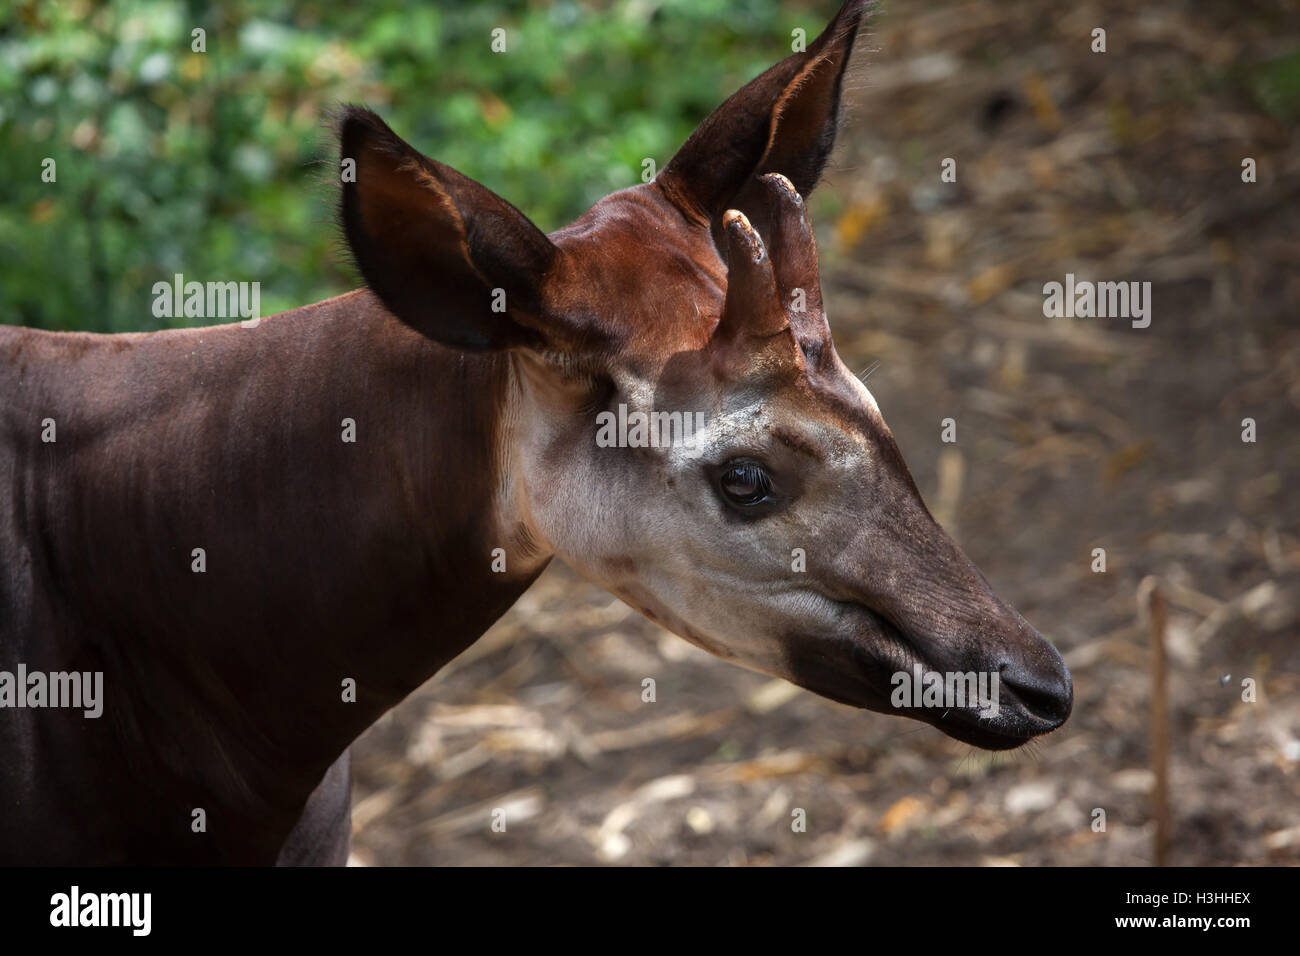 Okapi (Okapia johnstoni). Wildlife animal. Stock Photo